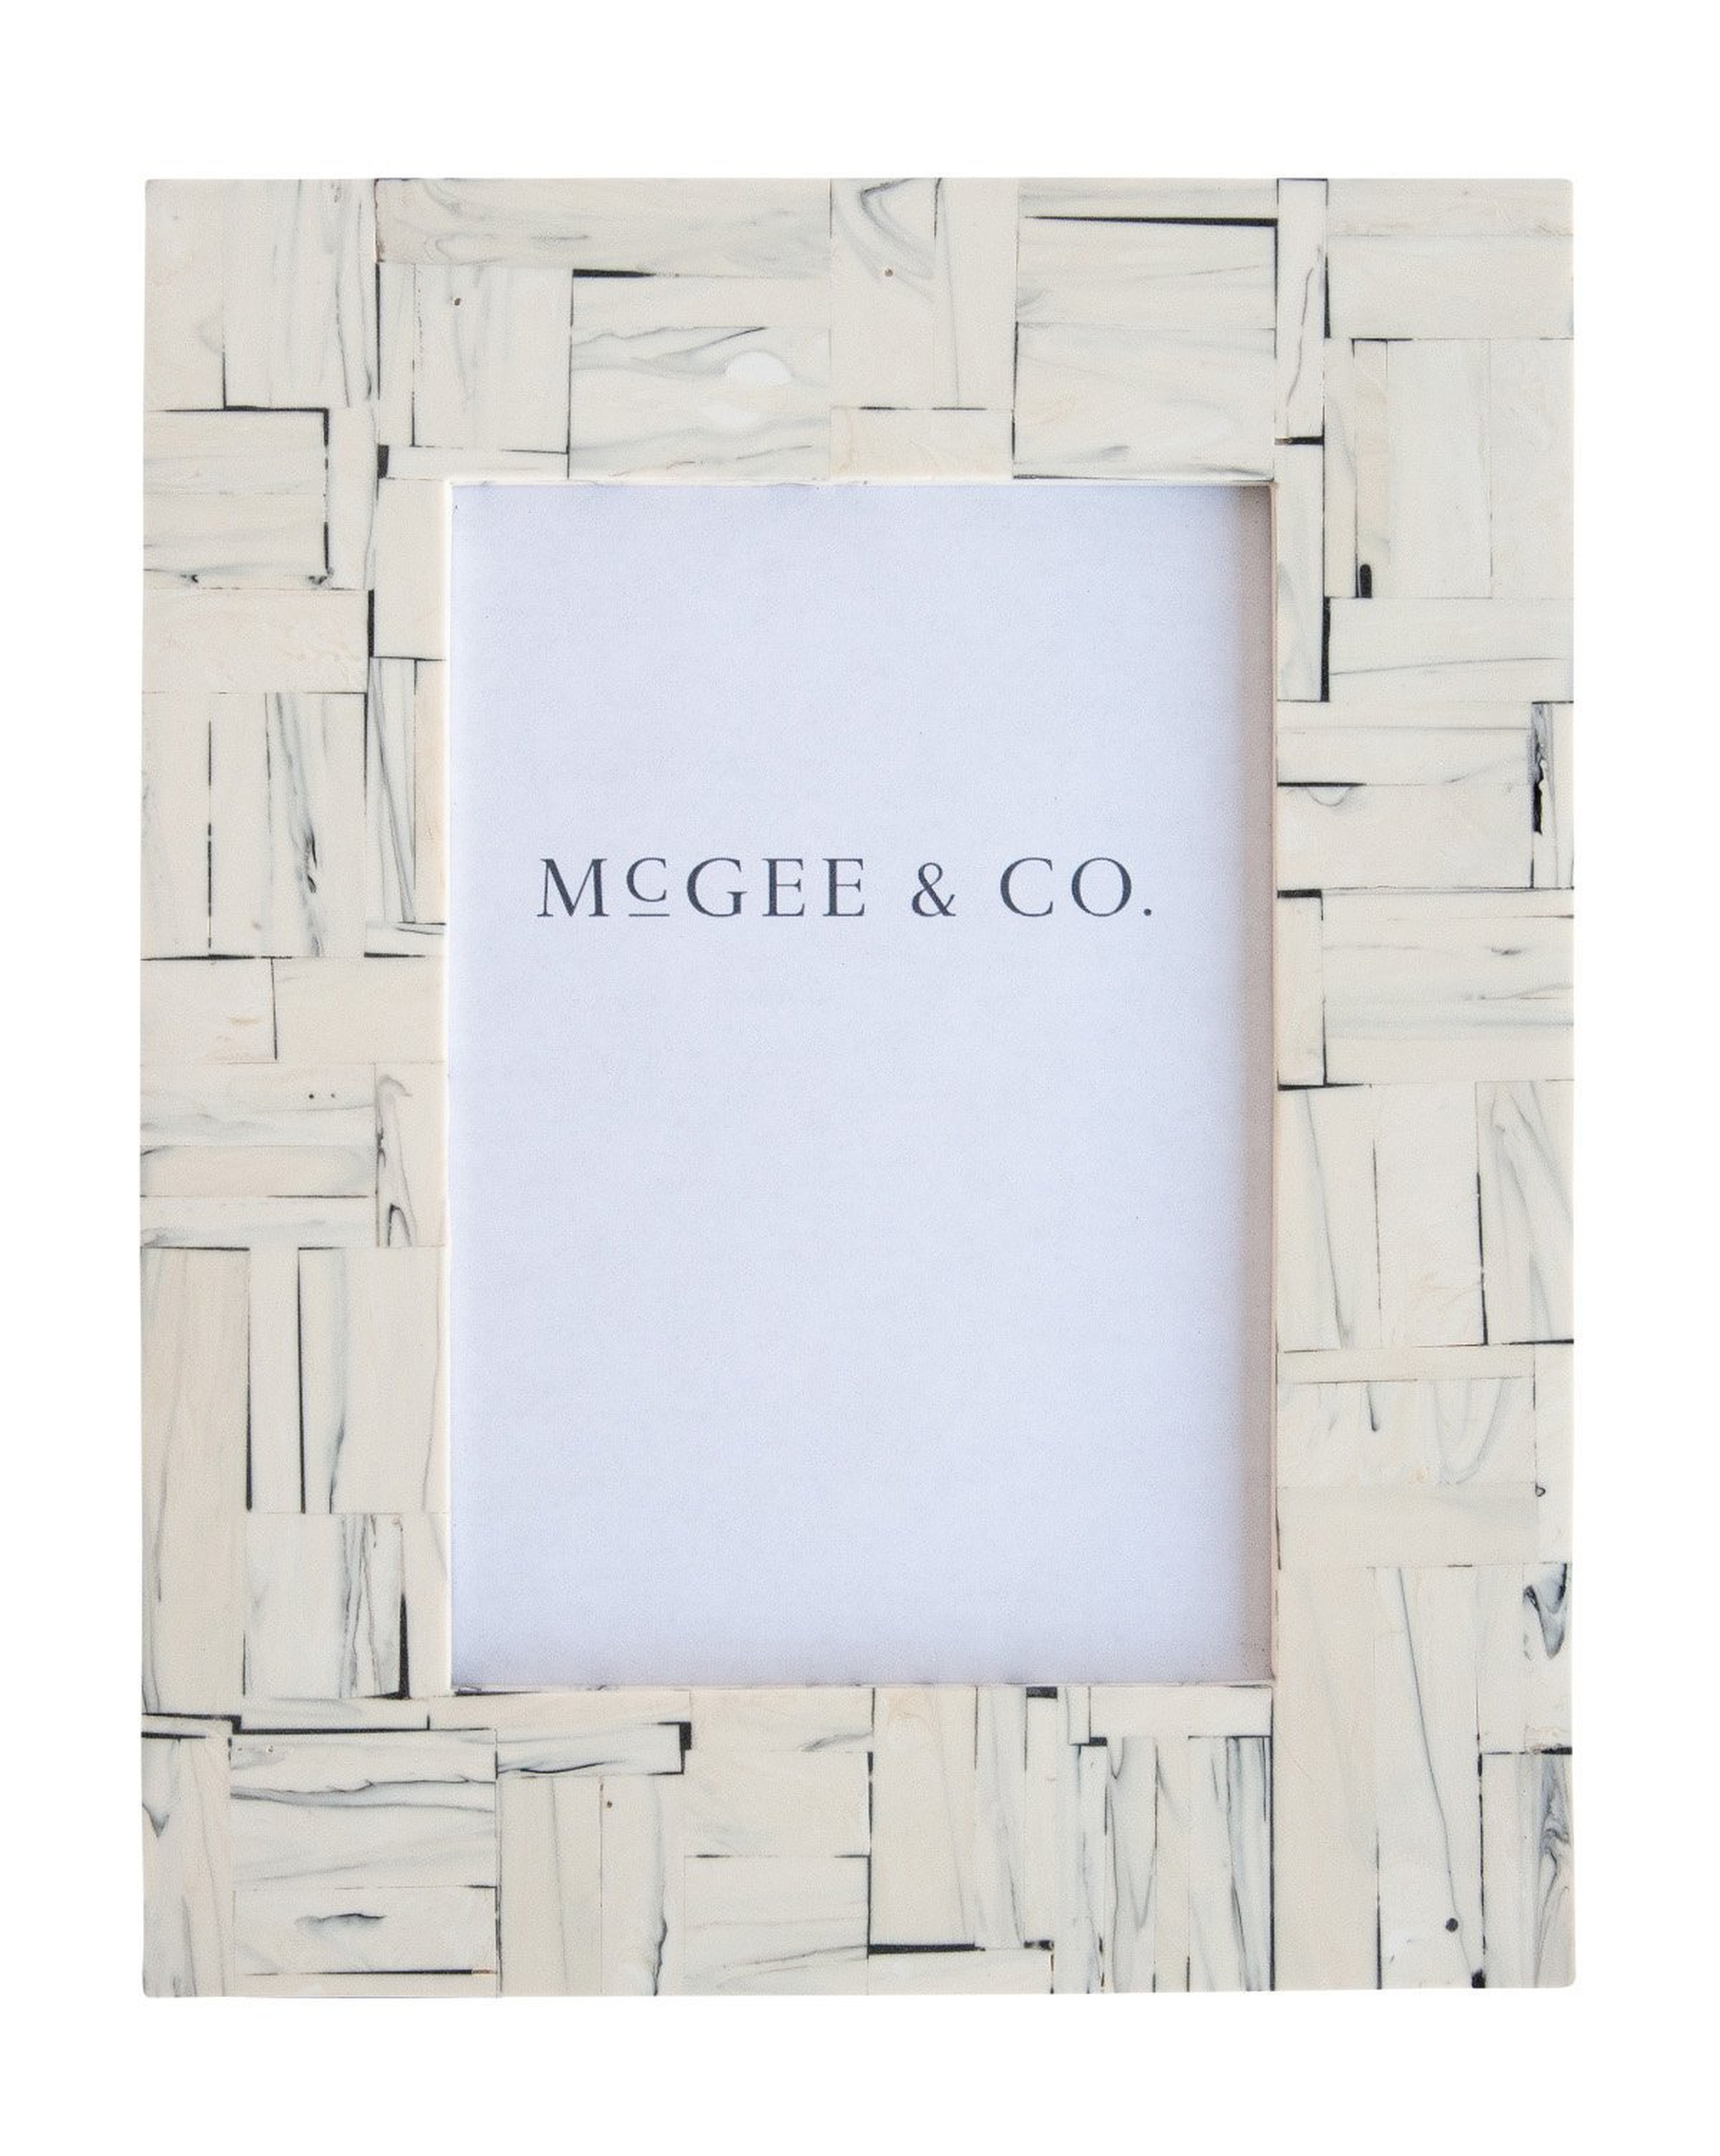 MOSAIC MARBLE FRAME - 5" x 7" - McGee & Co.